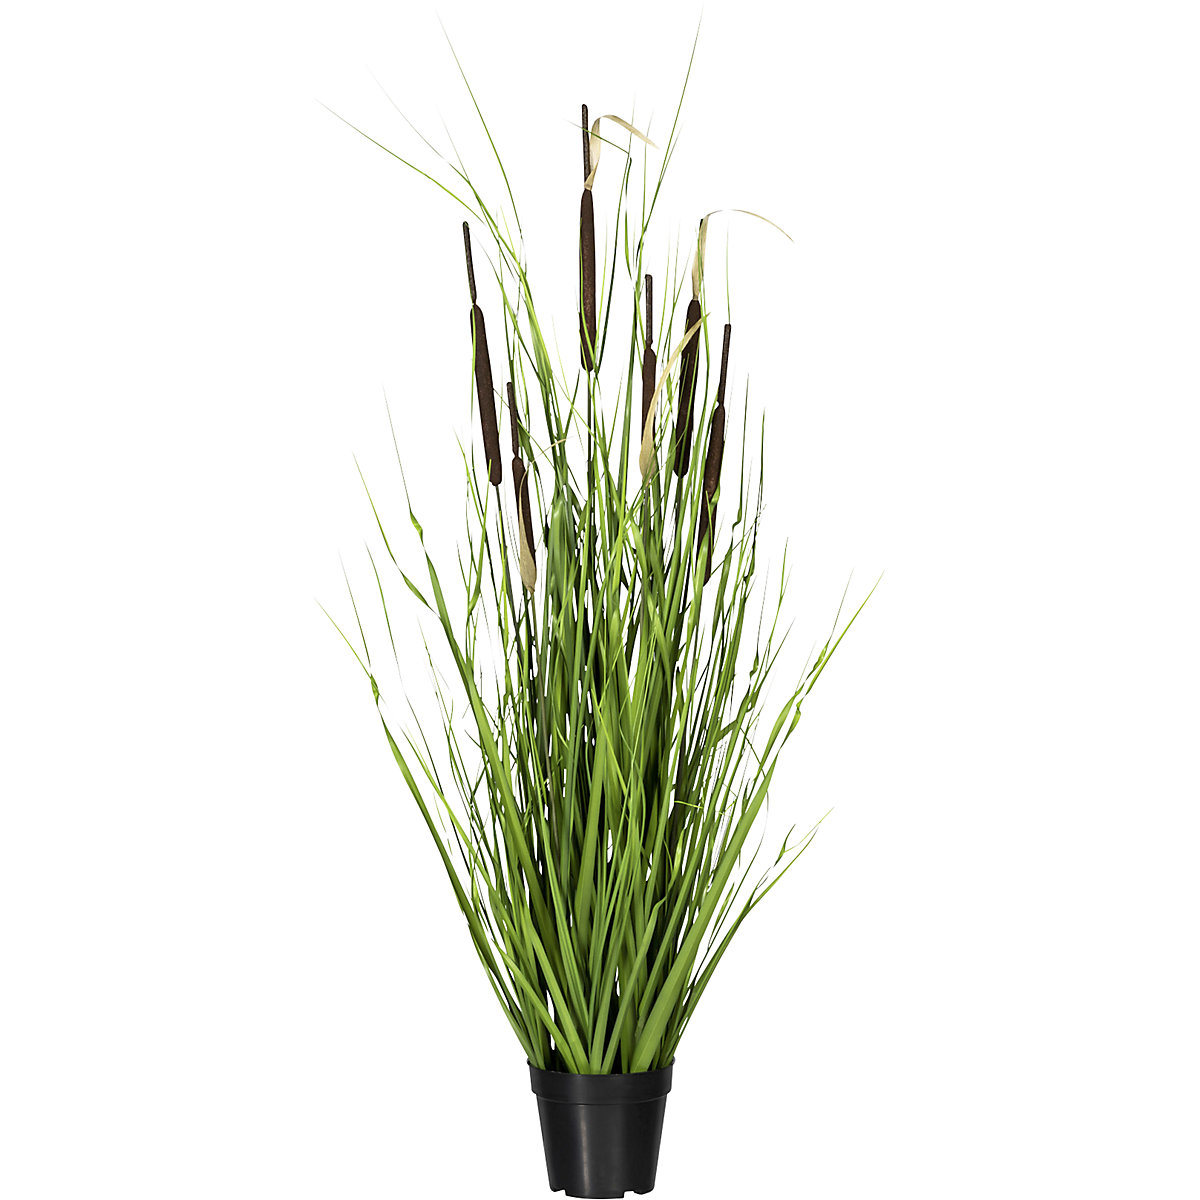 Grass bush with cattail